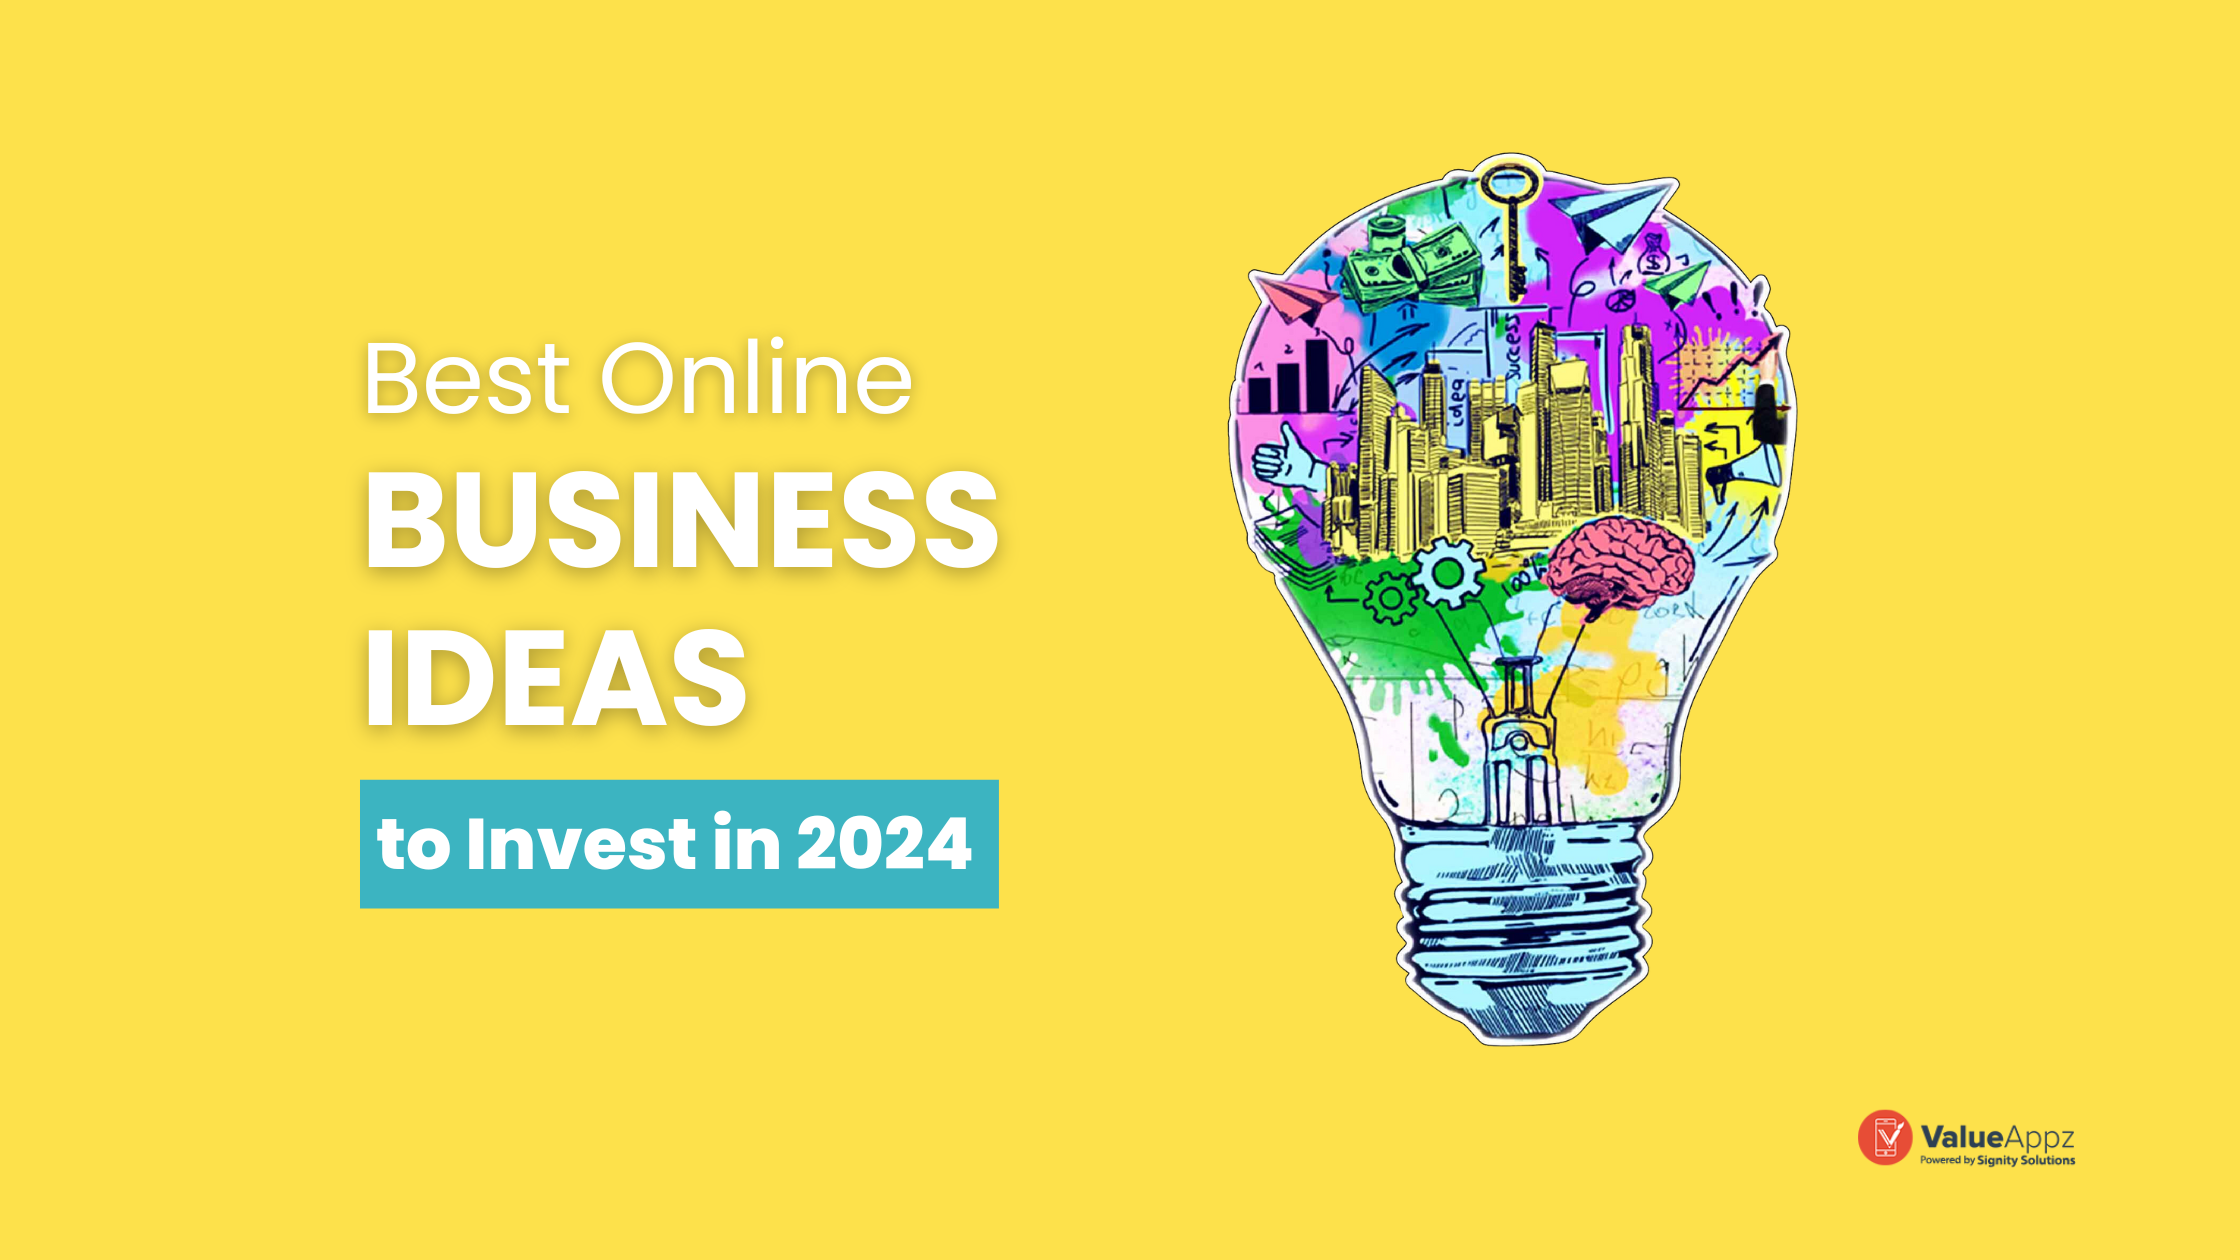 Best Online Business Ideas to Invest in 2024 - ValueAppz